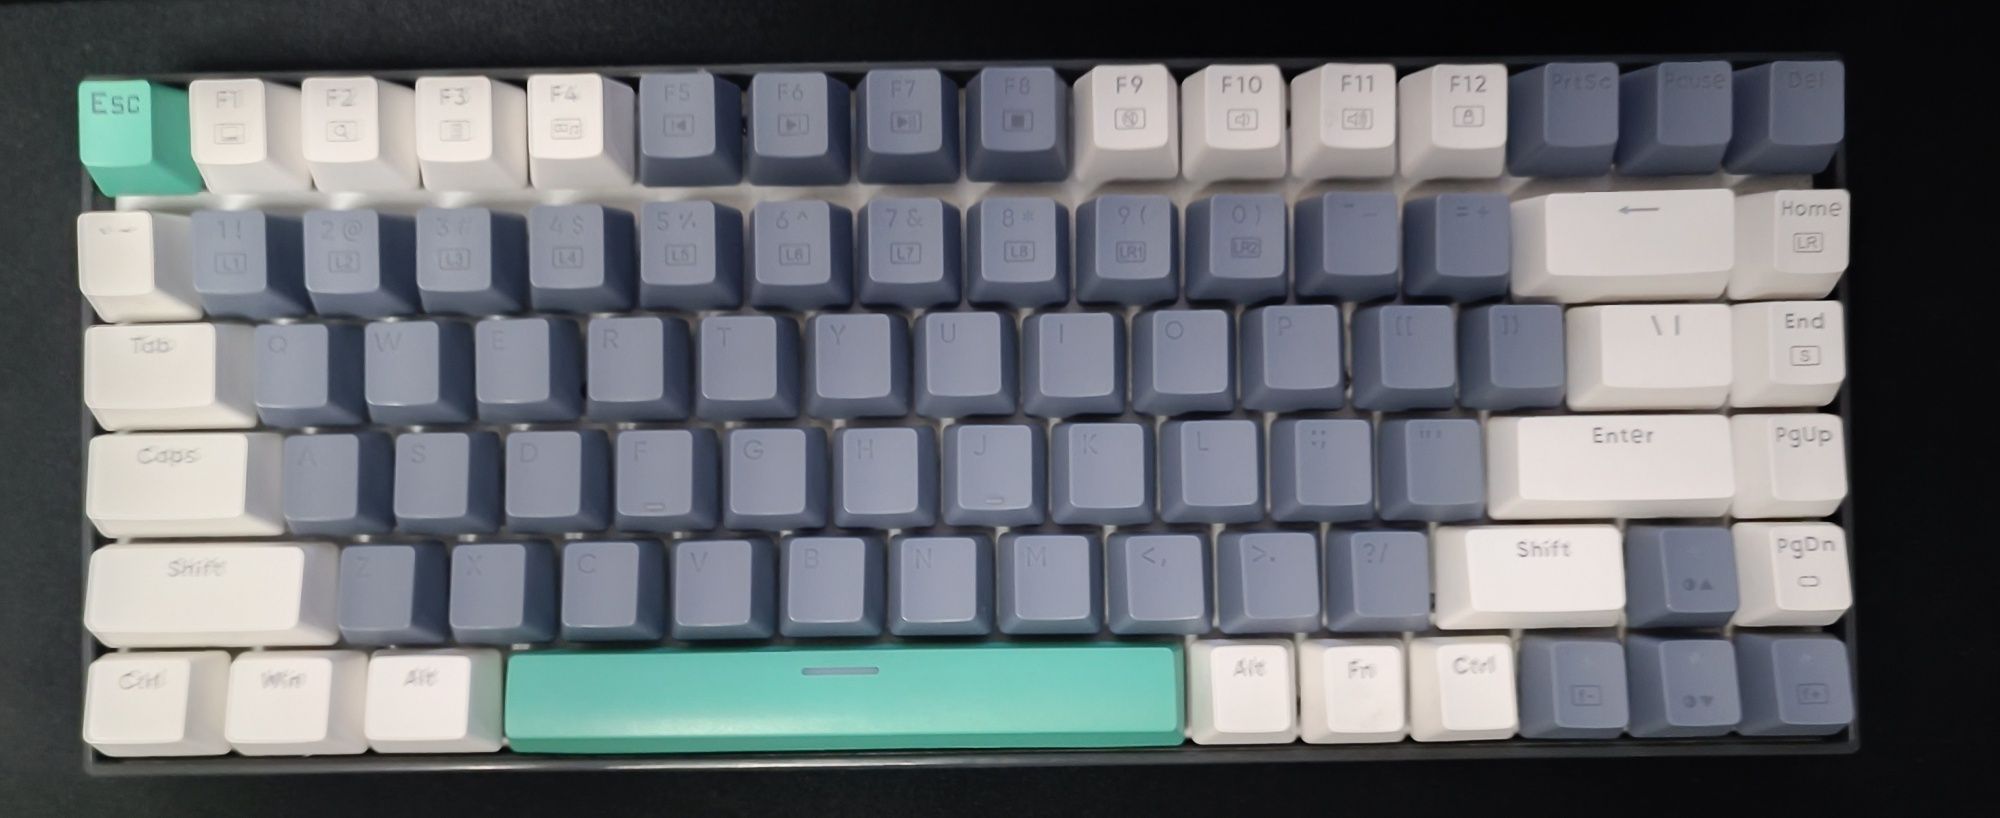 Игровая клавиатура MACHENIKE K500